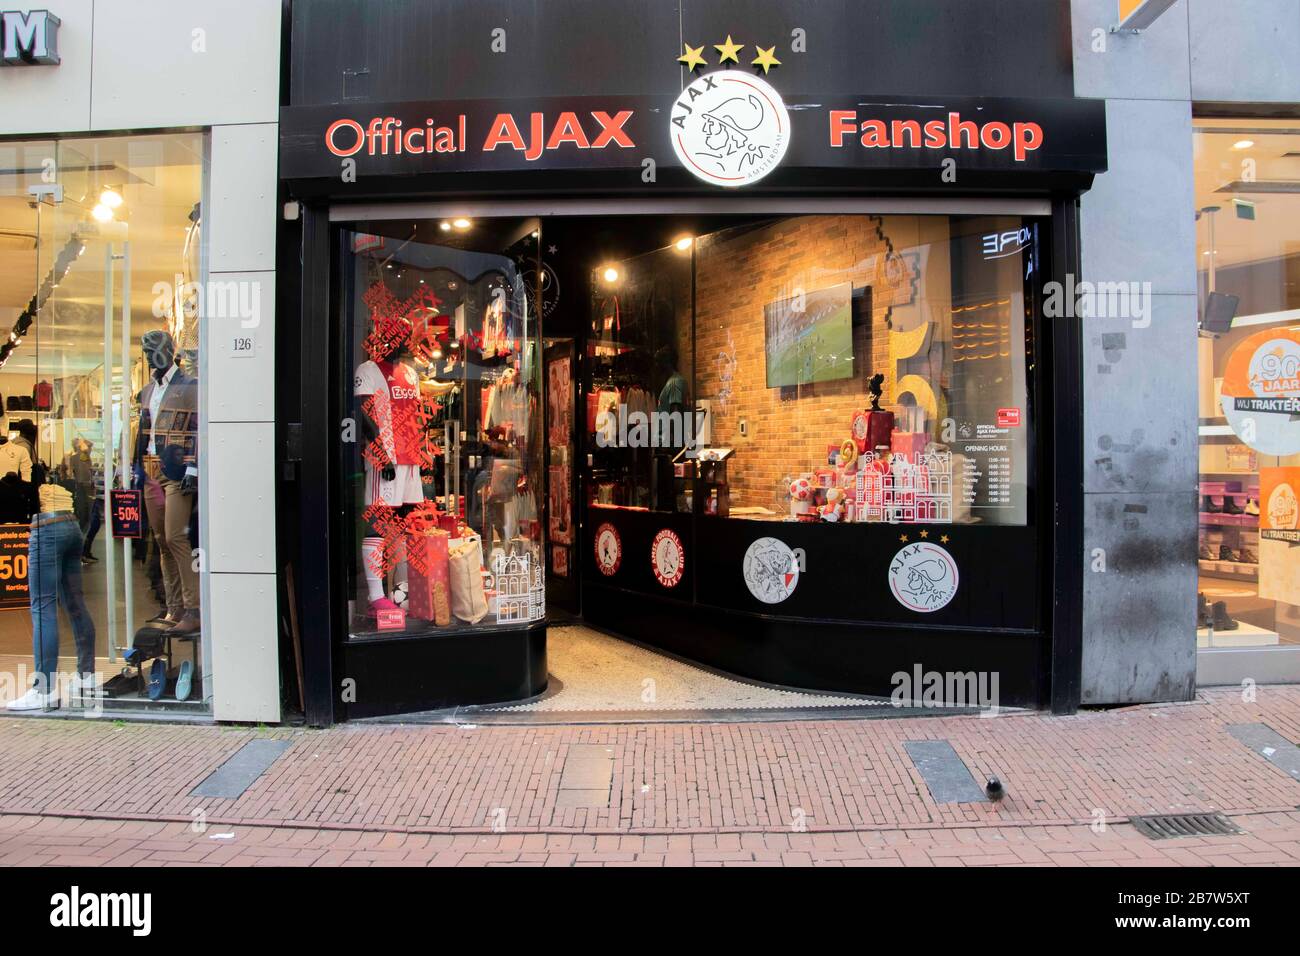 zand spek rijkdom Official Ajax Fan Shop At Amsterdam The Netherlands 2019 Stock Photo - Alamy